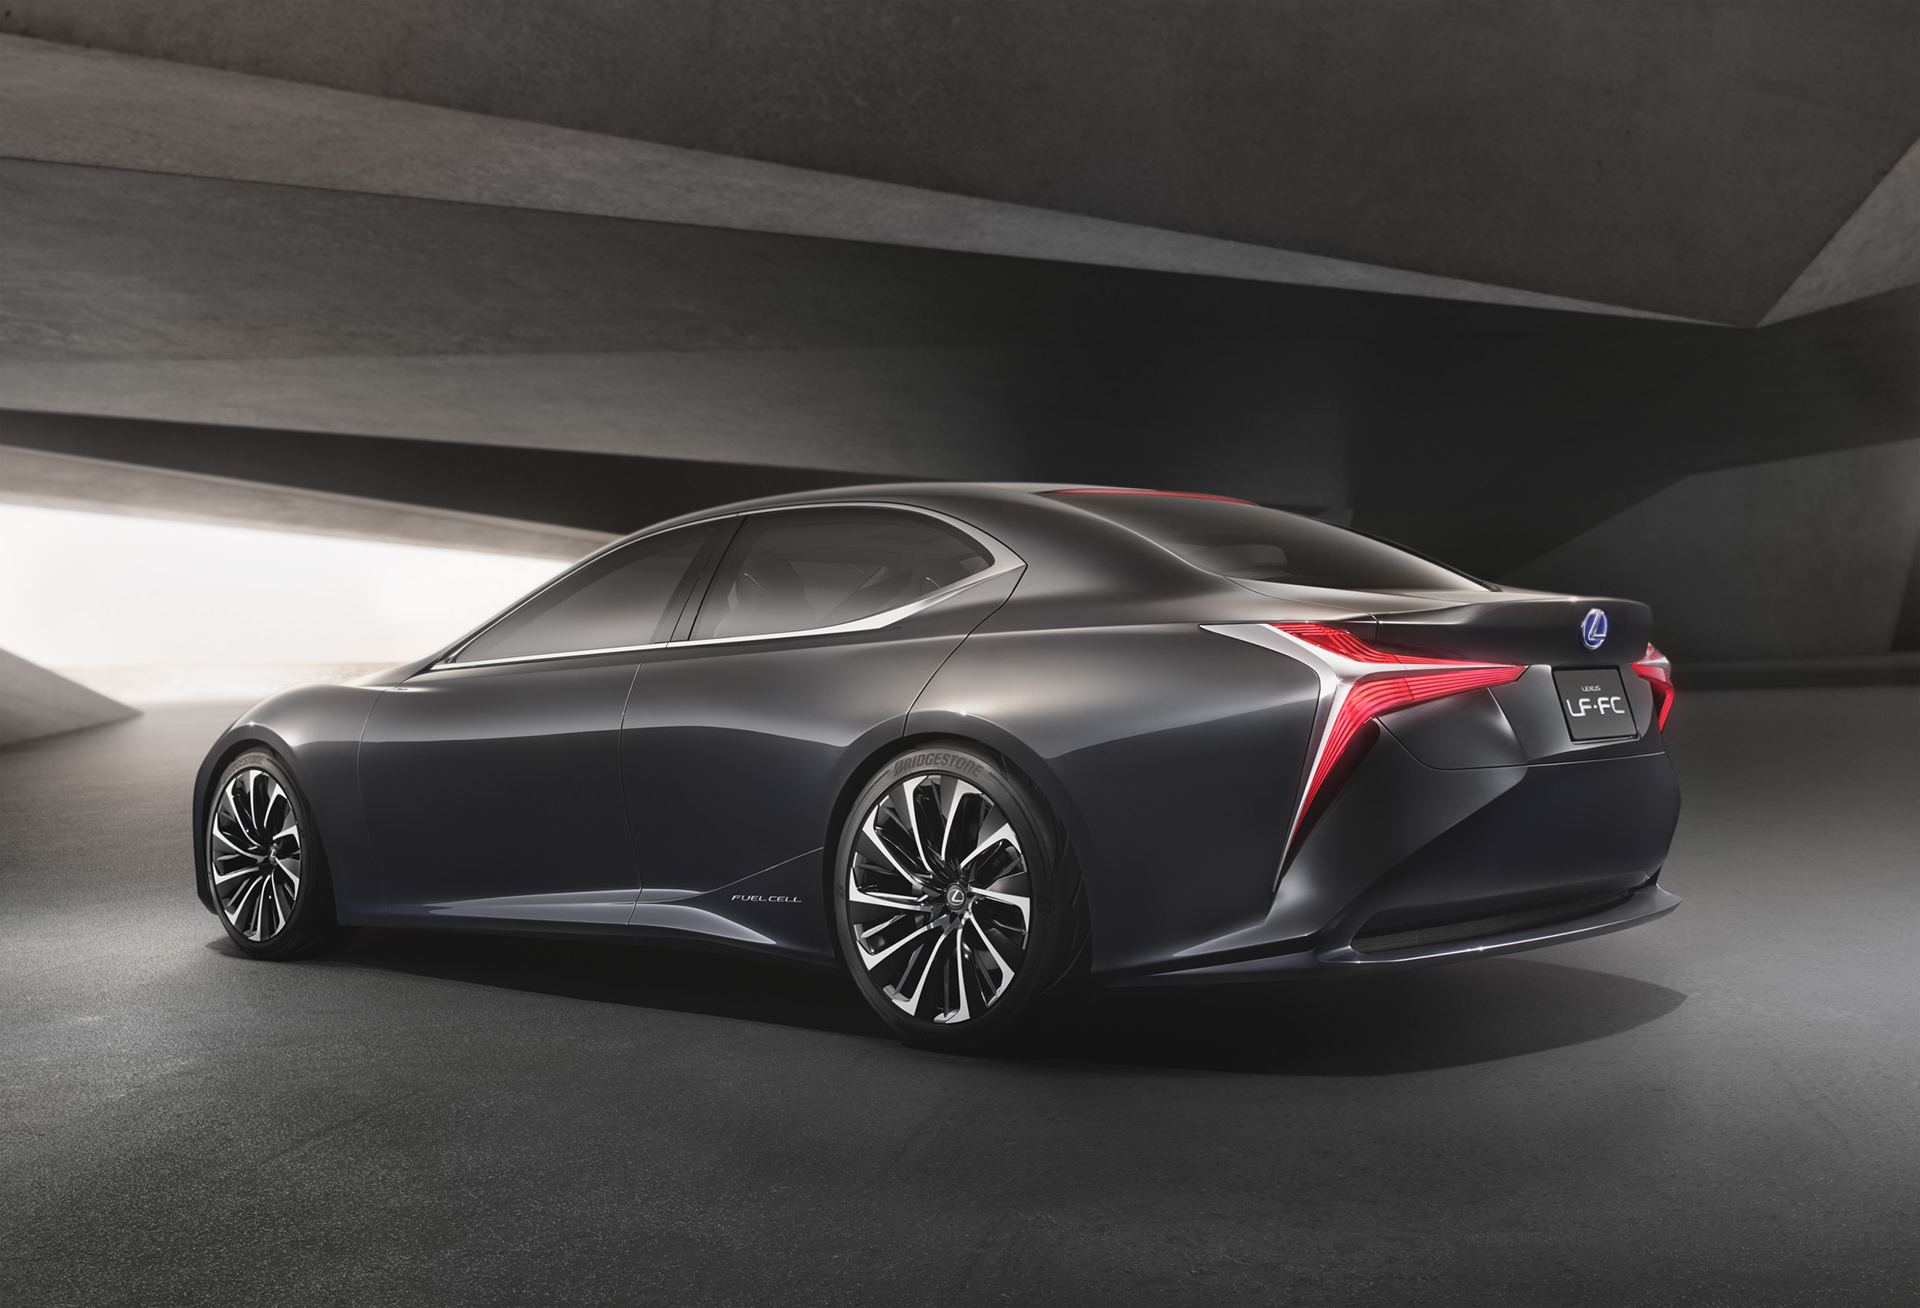 2016 Lexus LF-FC Concept (6)